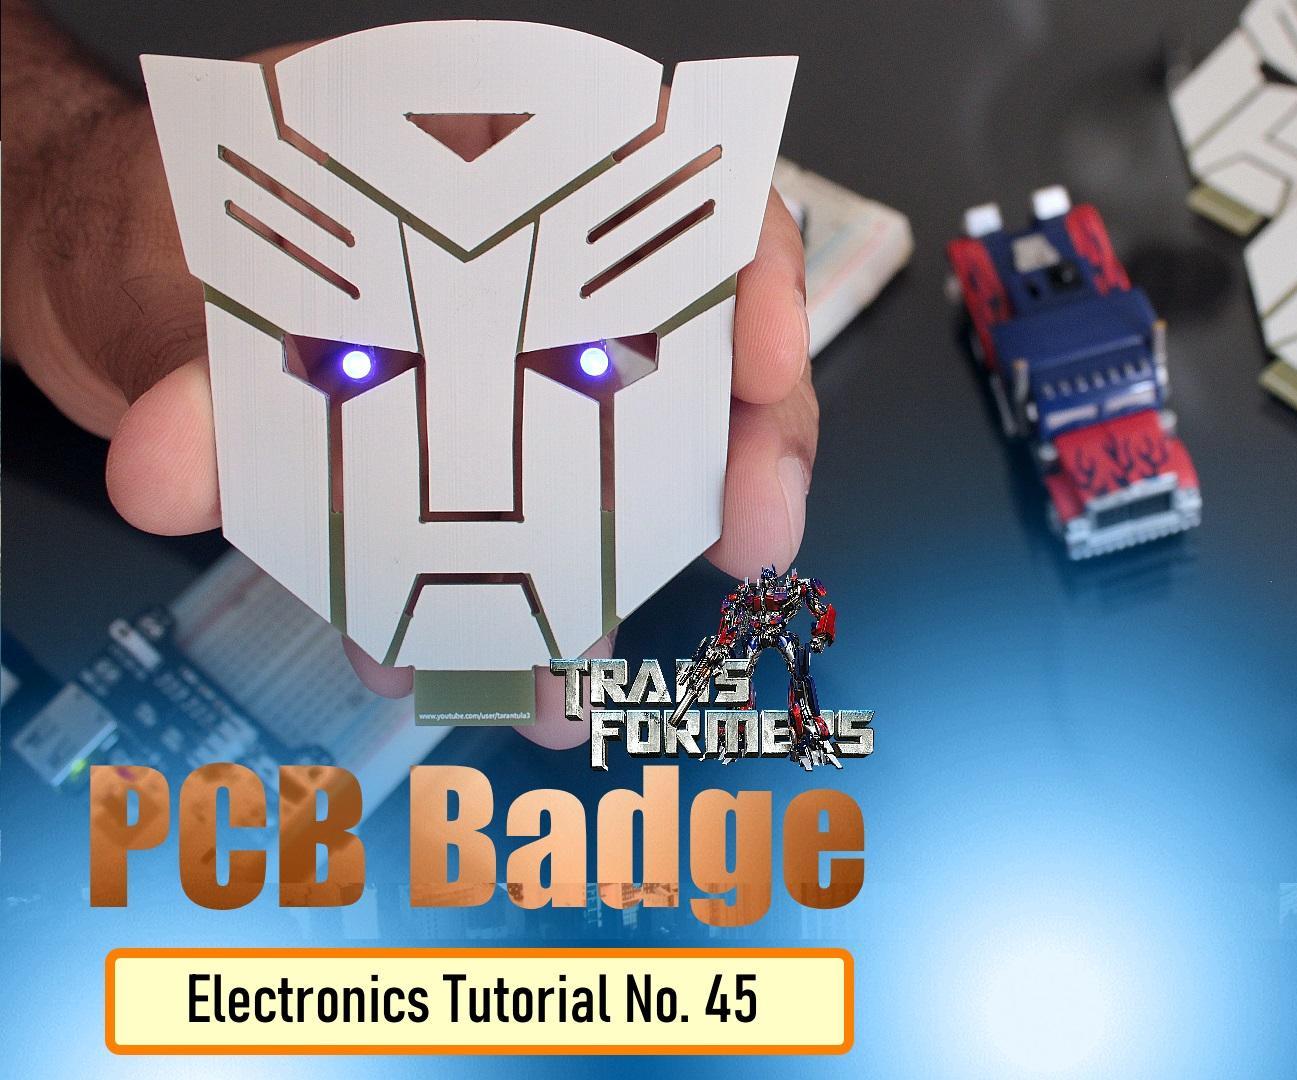 Transformers PCB BADGE